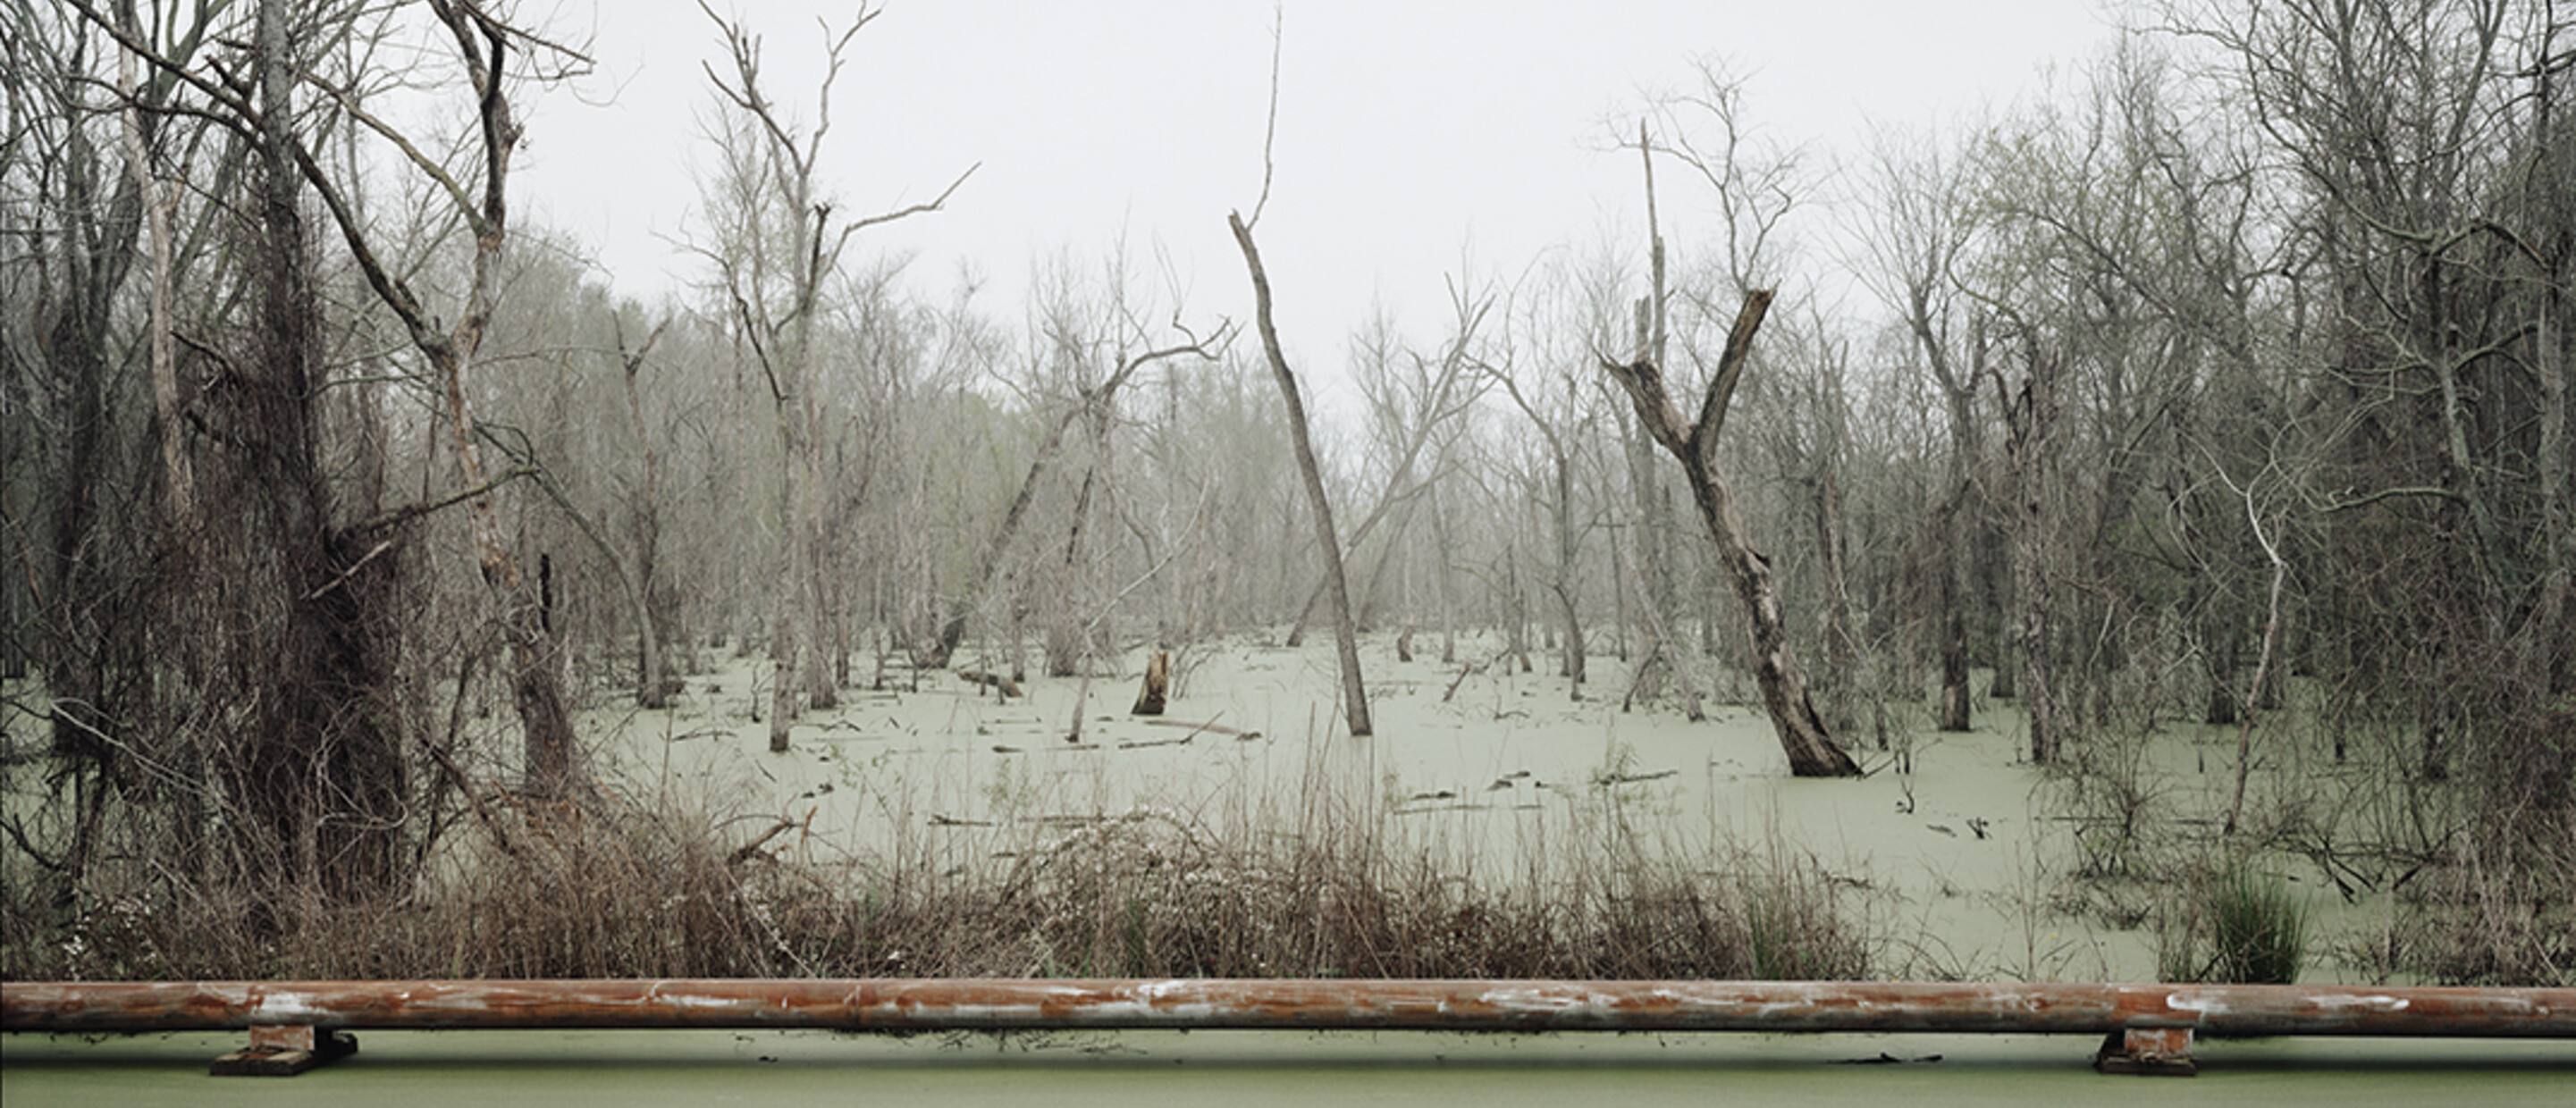 Richard Misrach, Swamp and Pipeline, Geismar, Louisiana, 1998, © Richard Misrach, courtesy of Pace/MacGill Gallery, New York; Fraenkel Gallery, San Francisco; and Marc Selwyn Gallery, Los Angeles